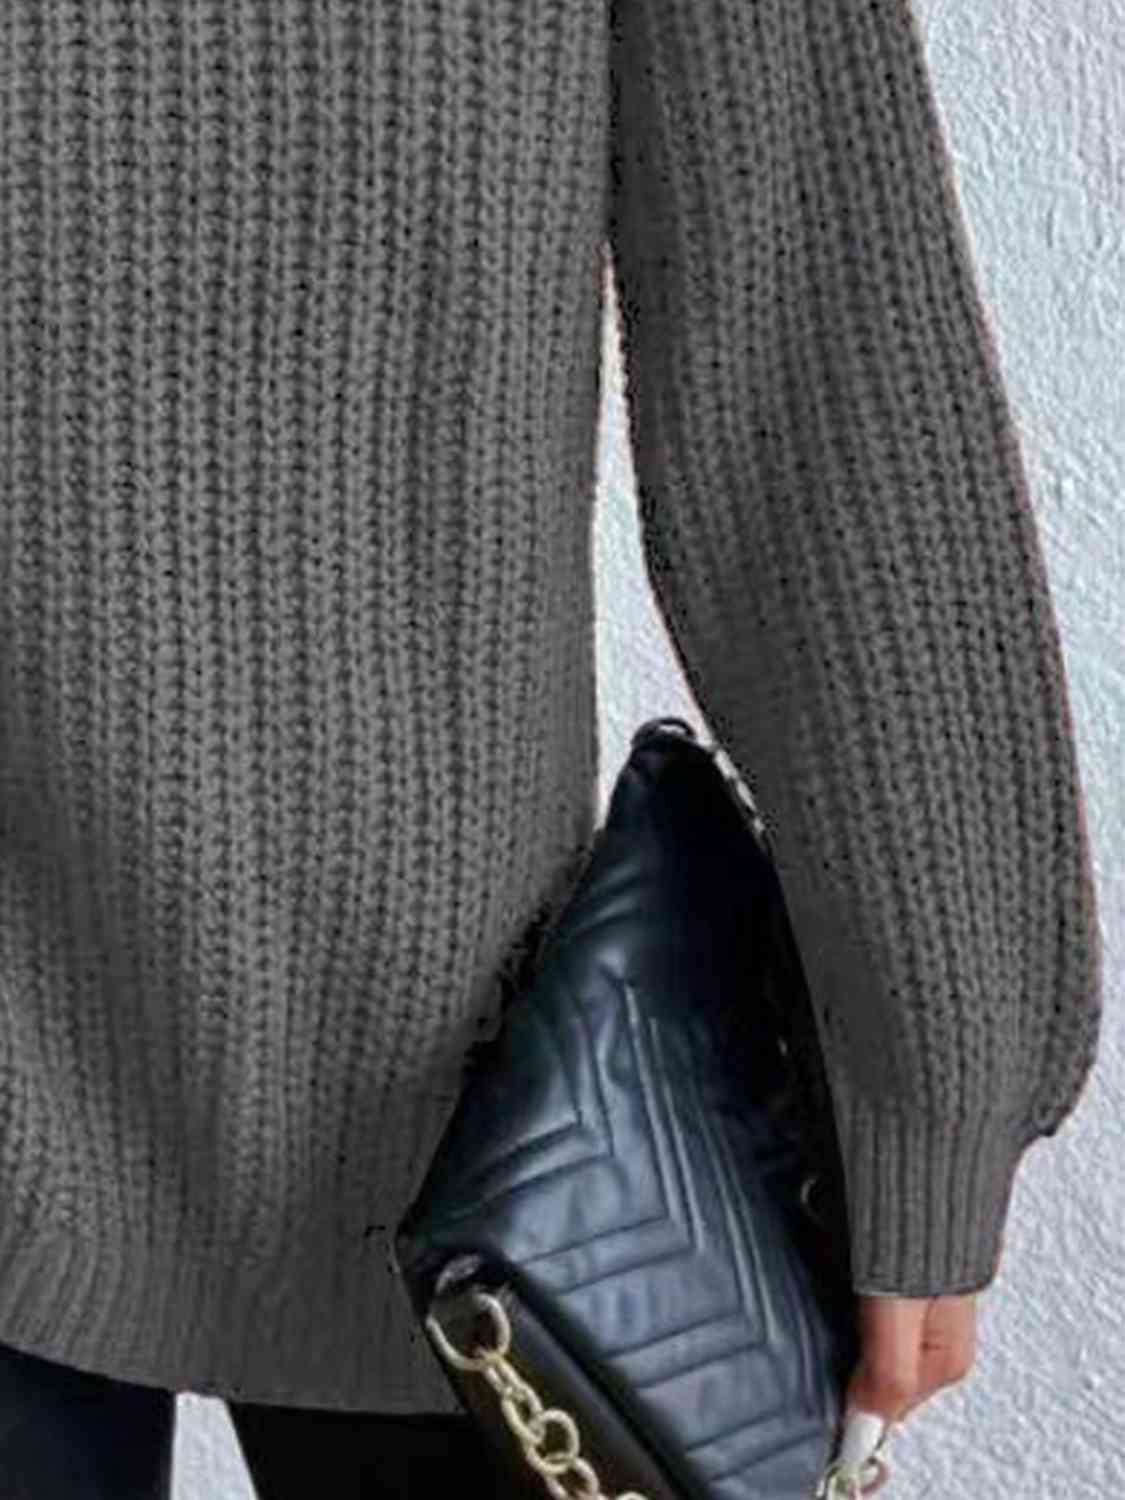 Turtleneck Rib Knit Sweater